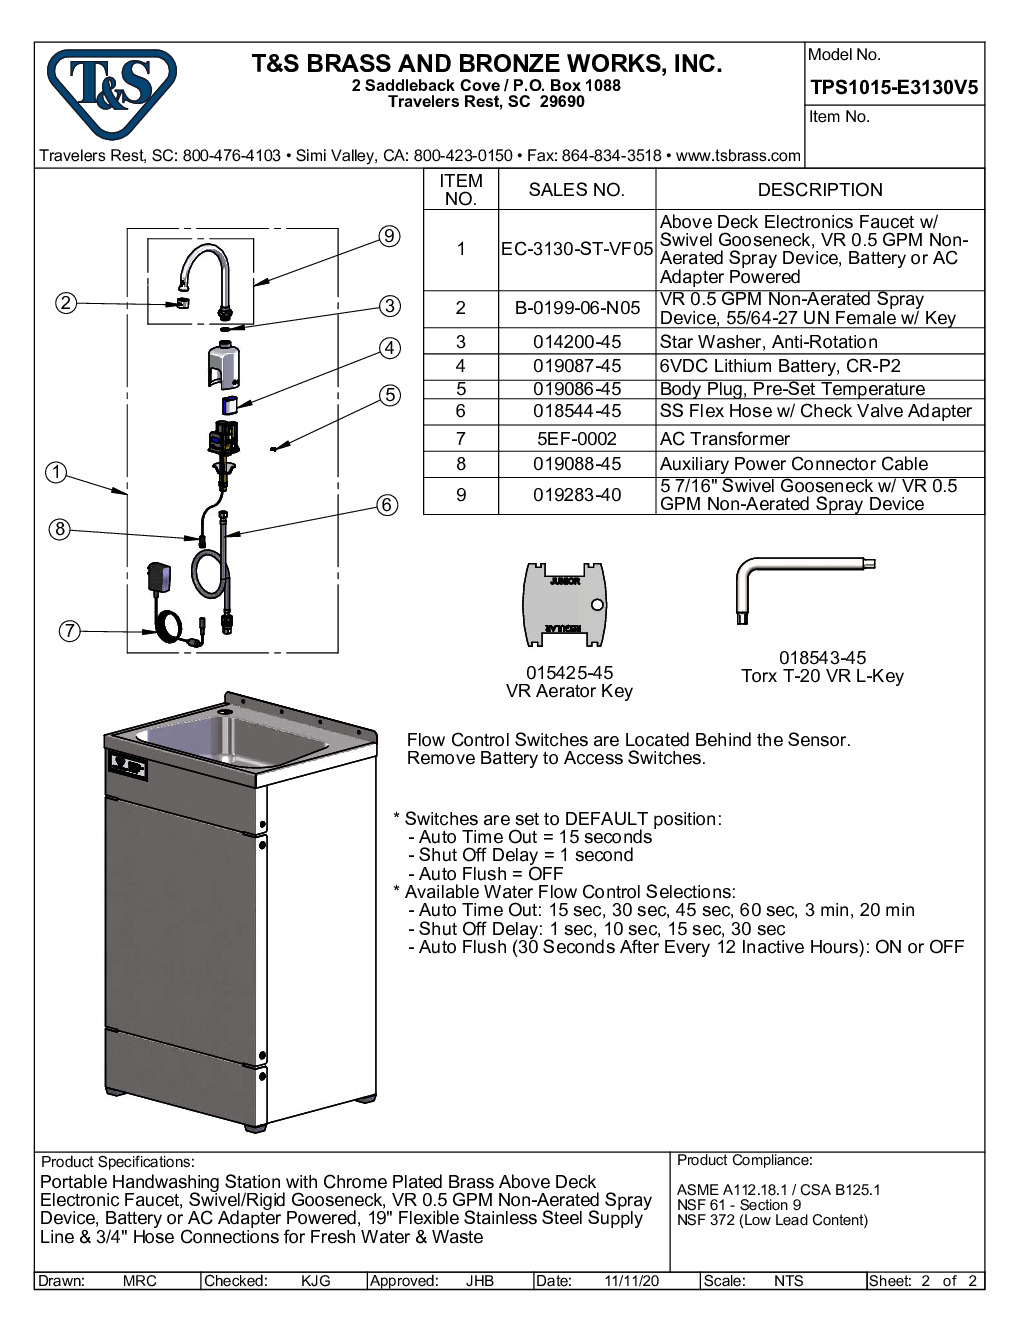 T&S Brass TPS1015-E3130V5 Handwashing System